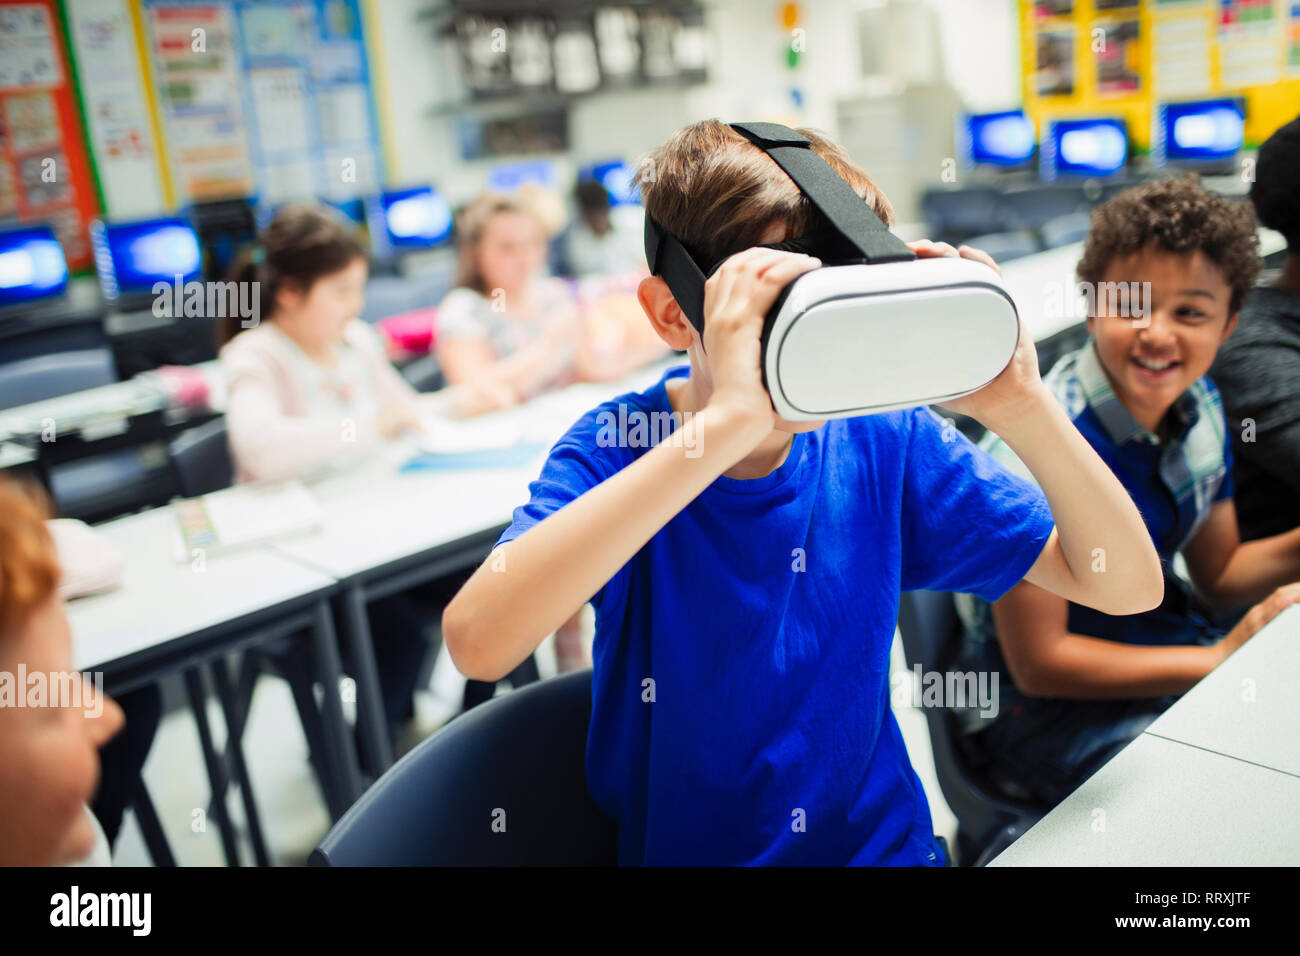 Junior high school junge Studenten mit Virtual Reality simulator Gläser im Klassenzimmer Stockfoto